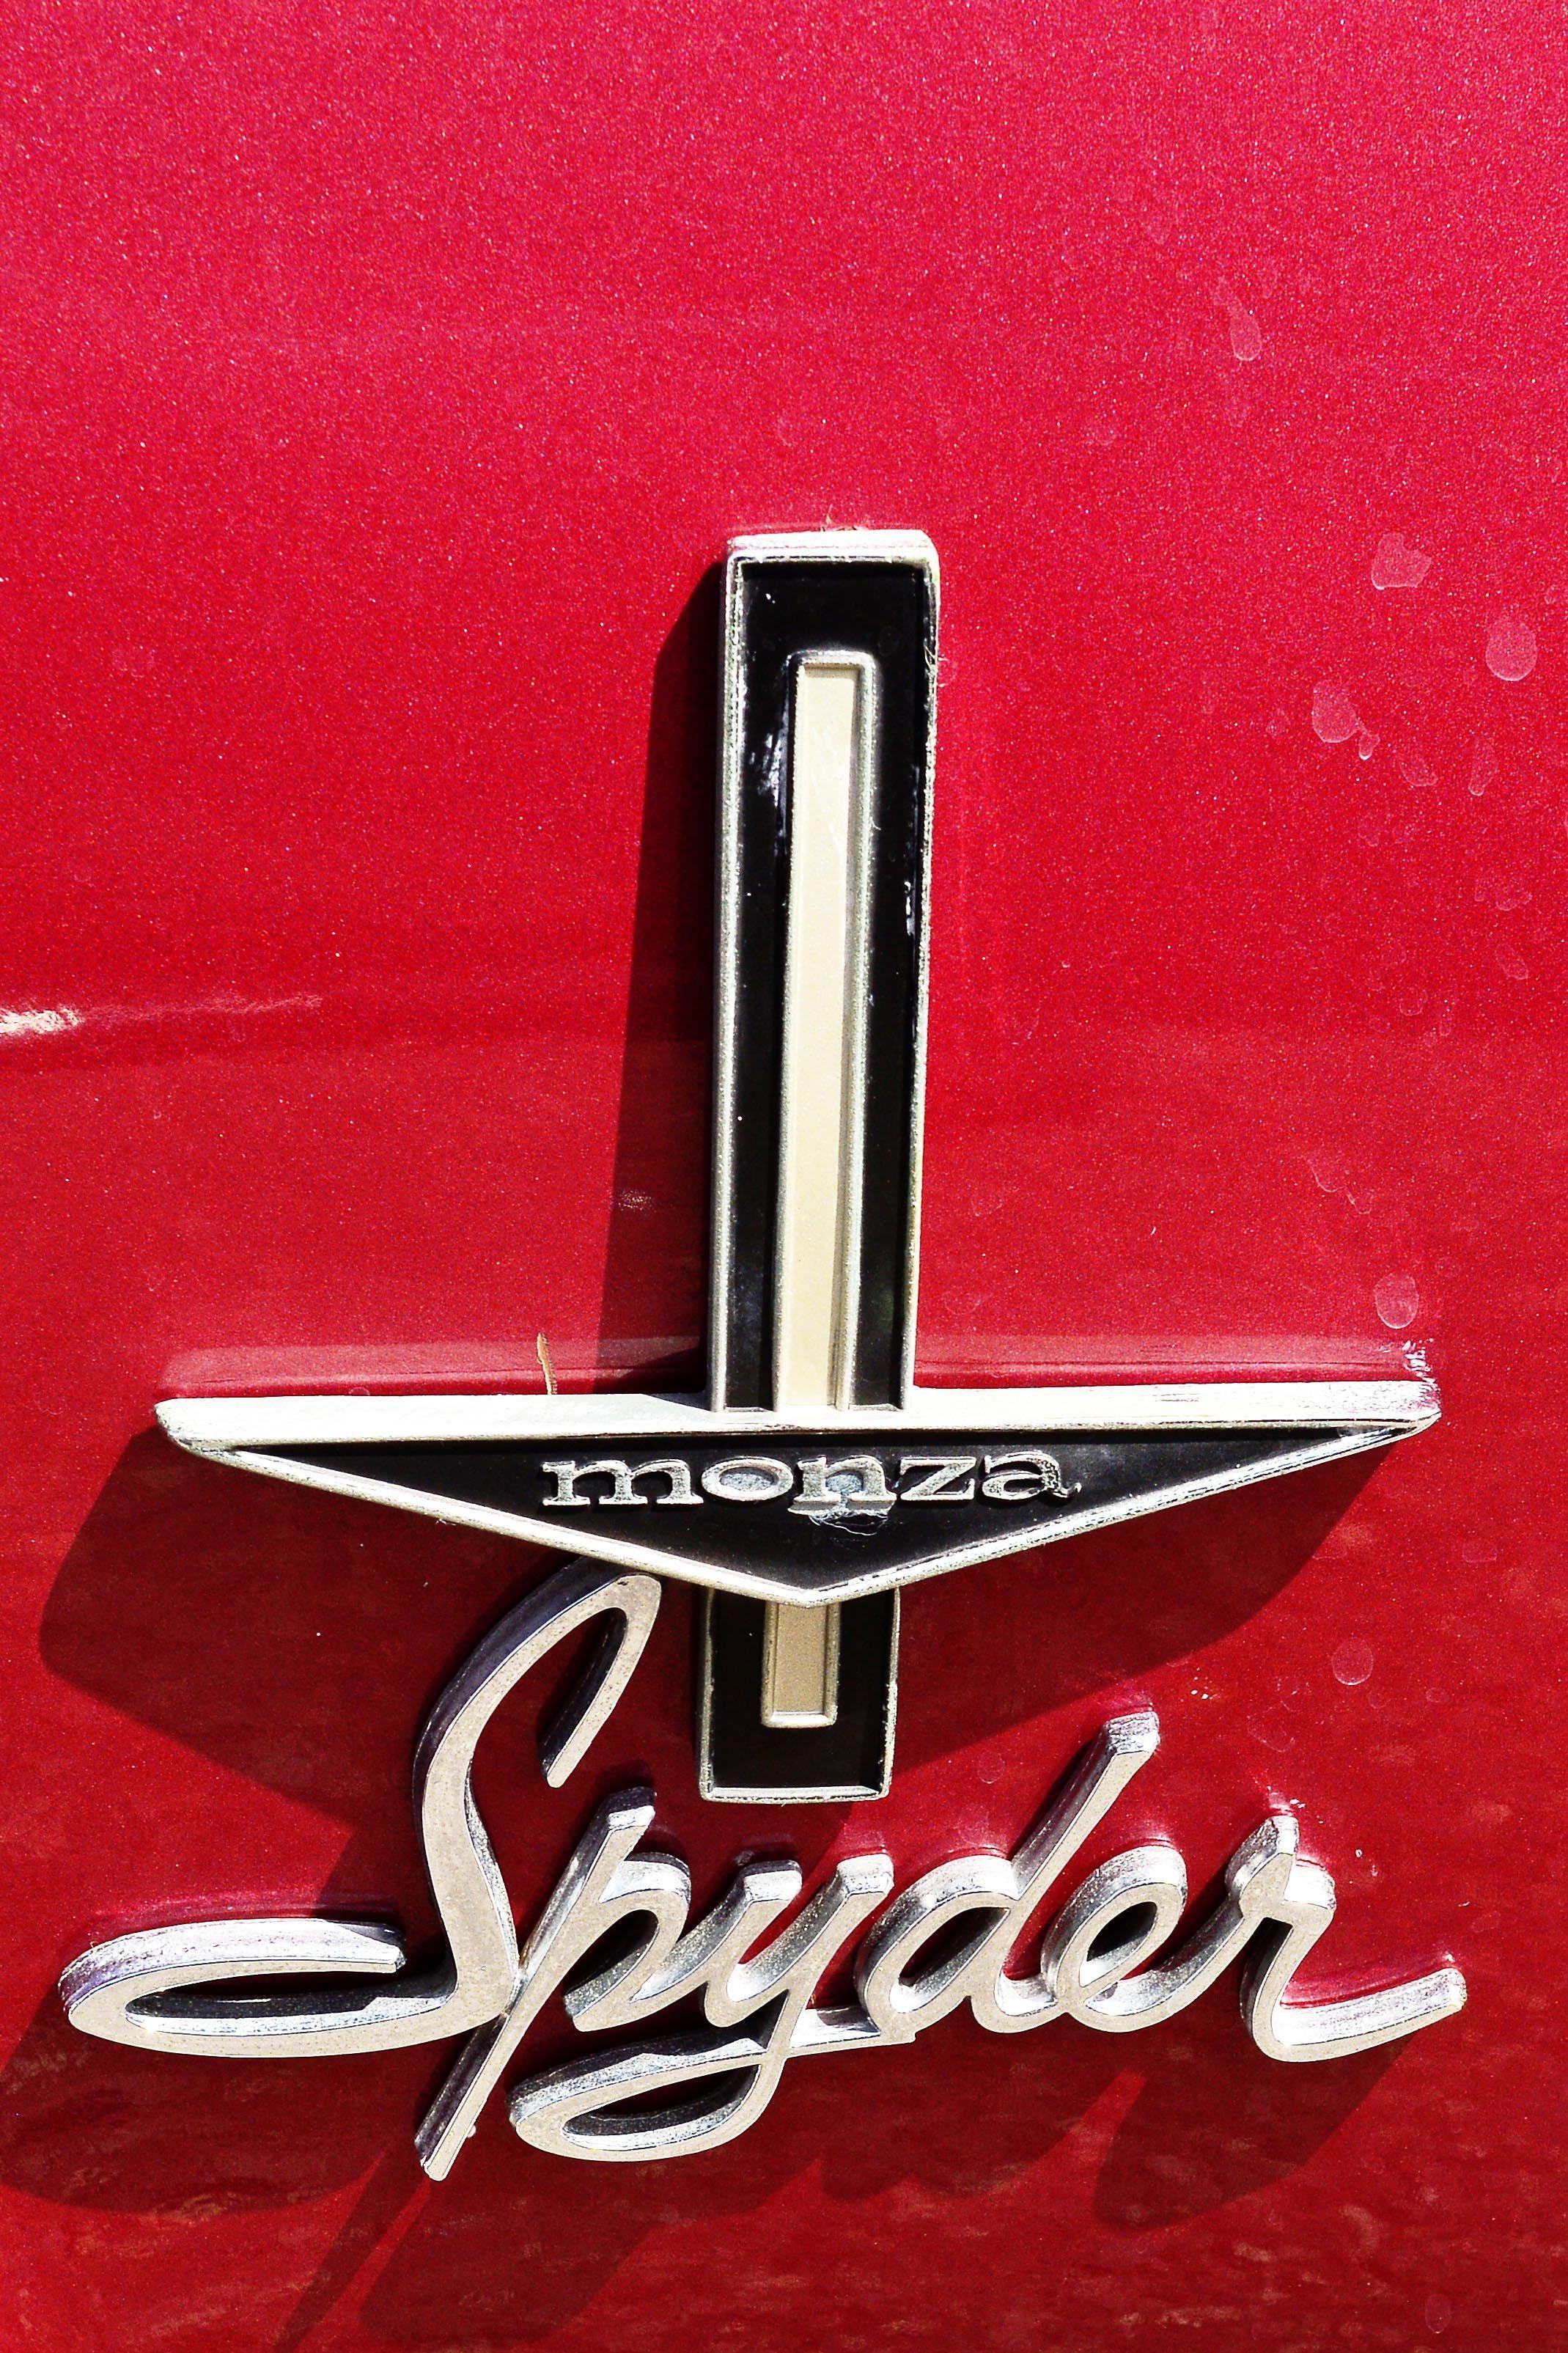 Corvair Logo - Corvair Monza Spyder fender badge at Automobile Drive Museum, El ...